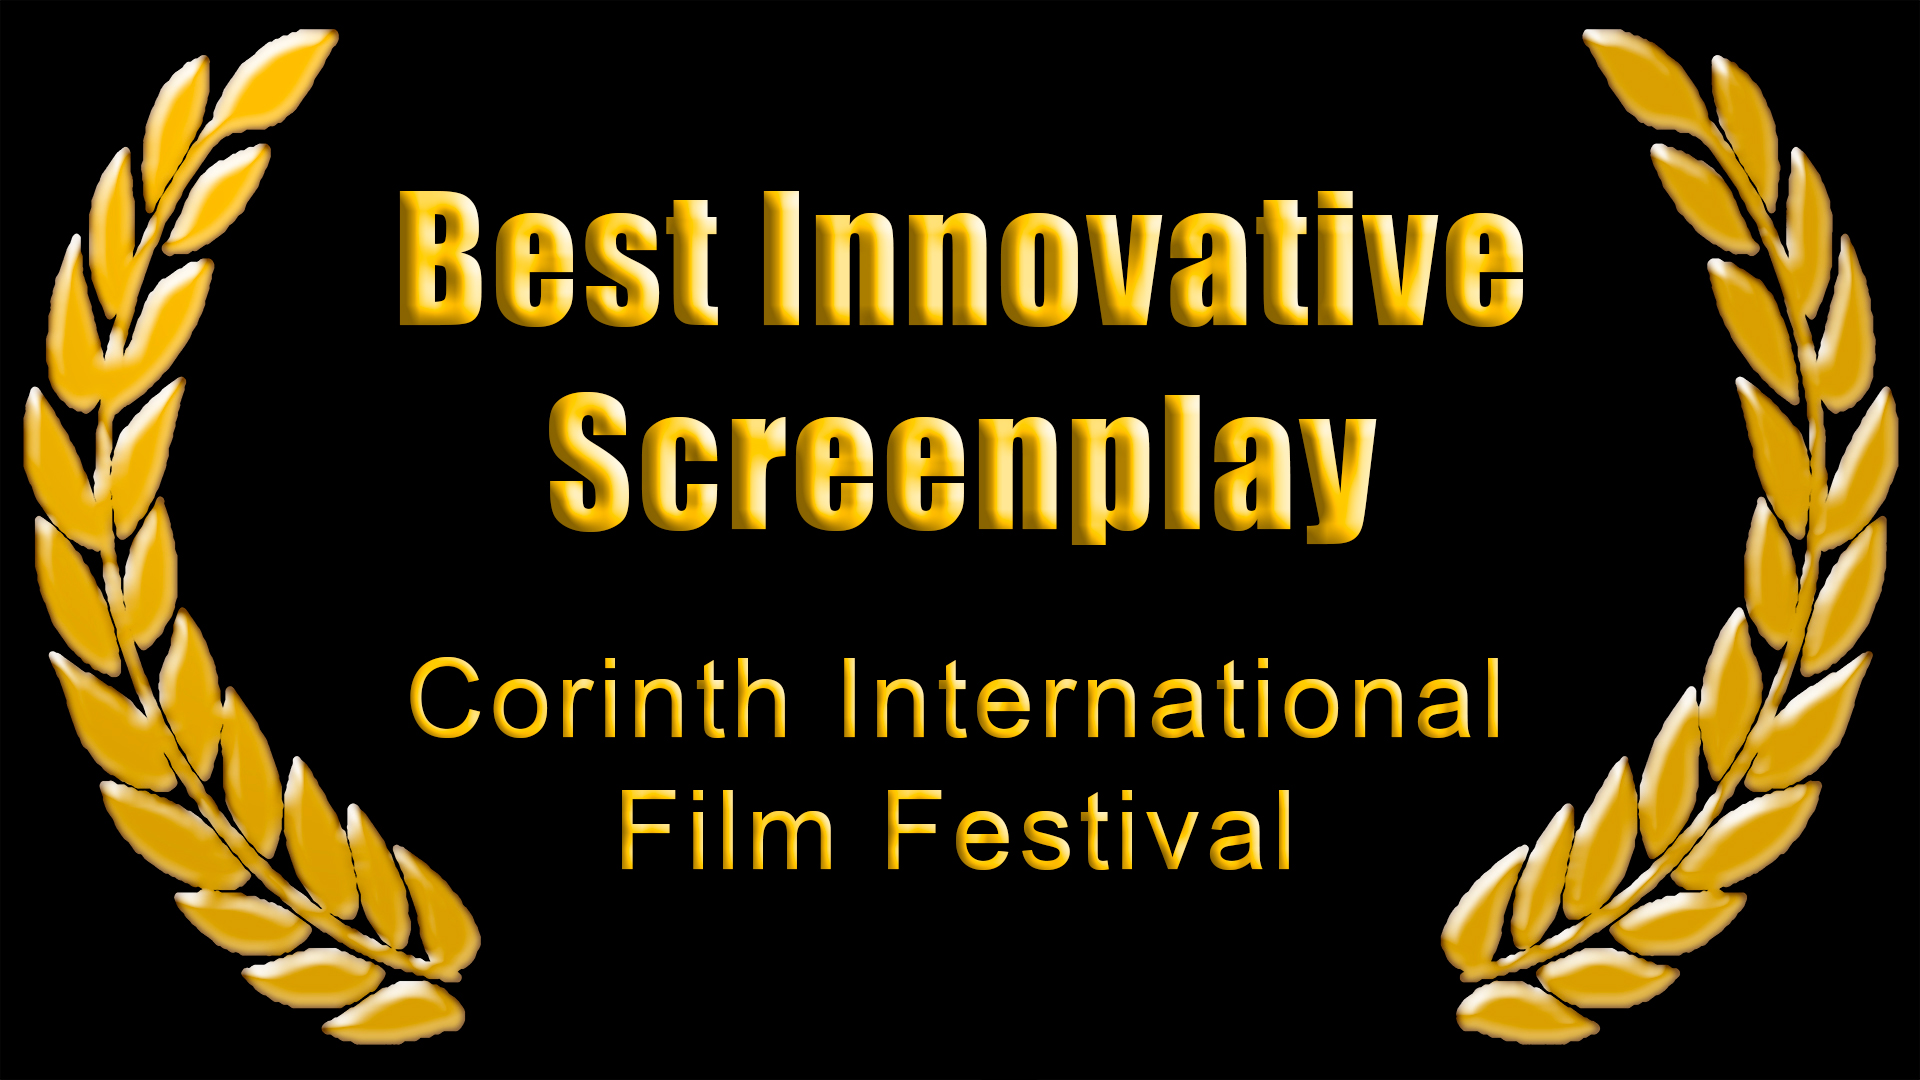 Corinth International Film Festival, 2011